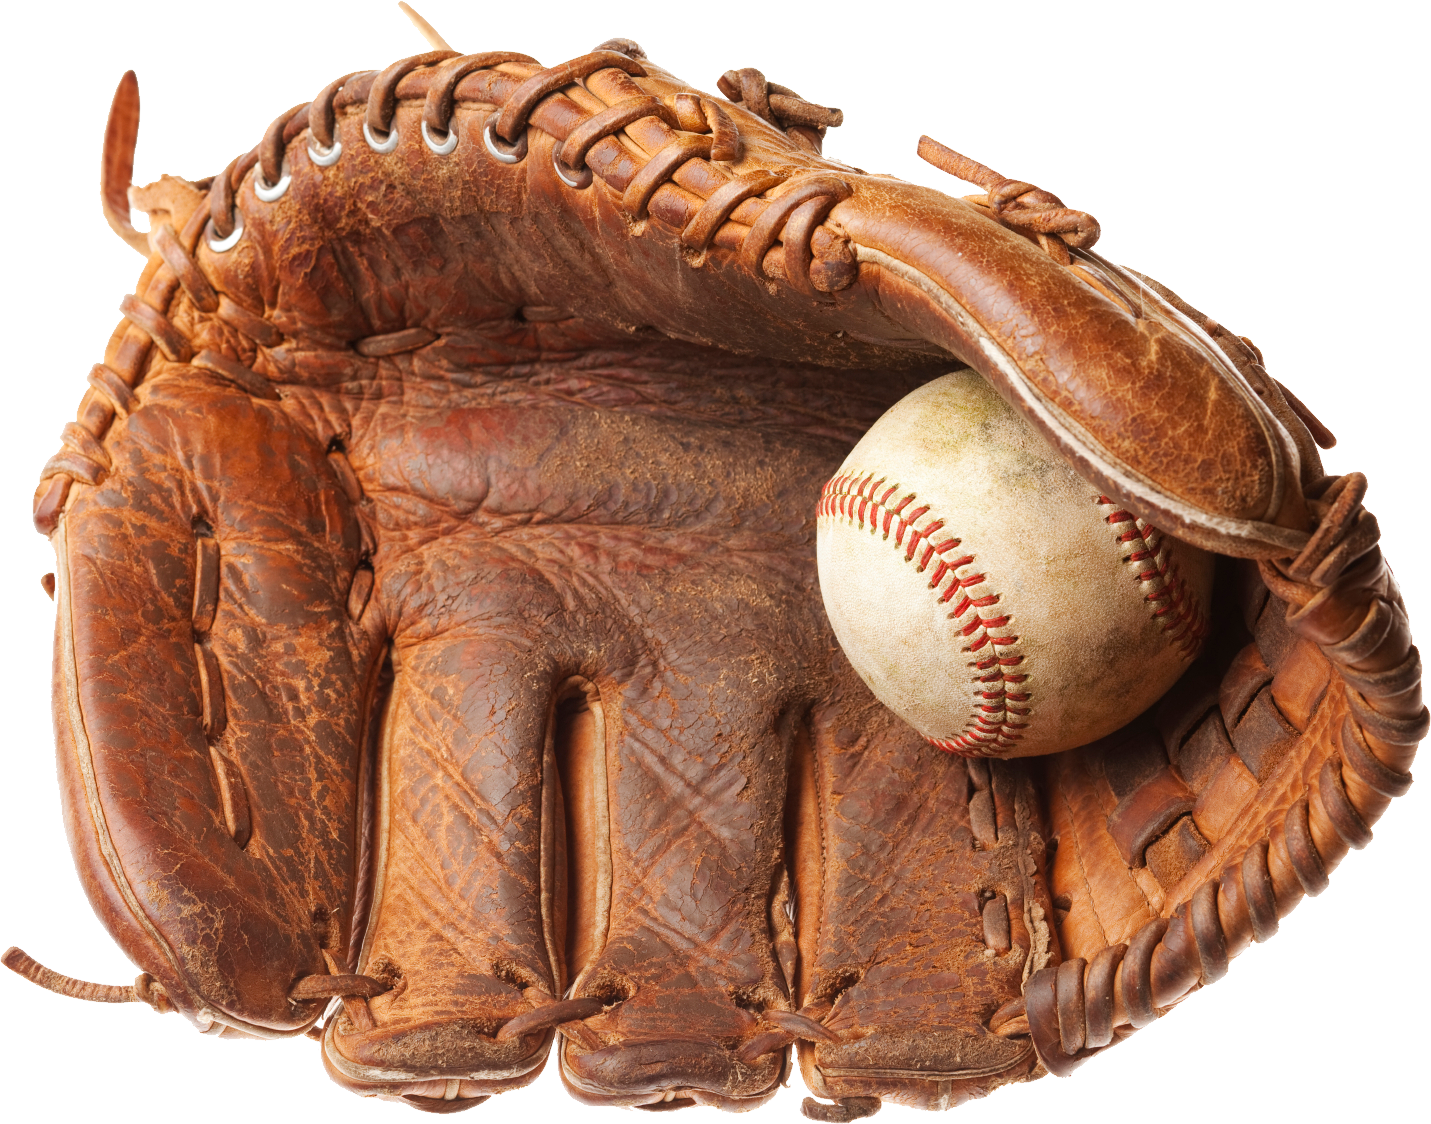 Baseball glove PNG